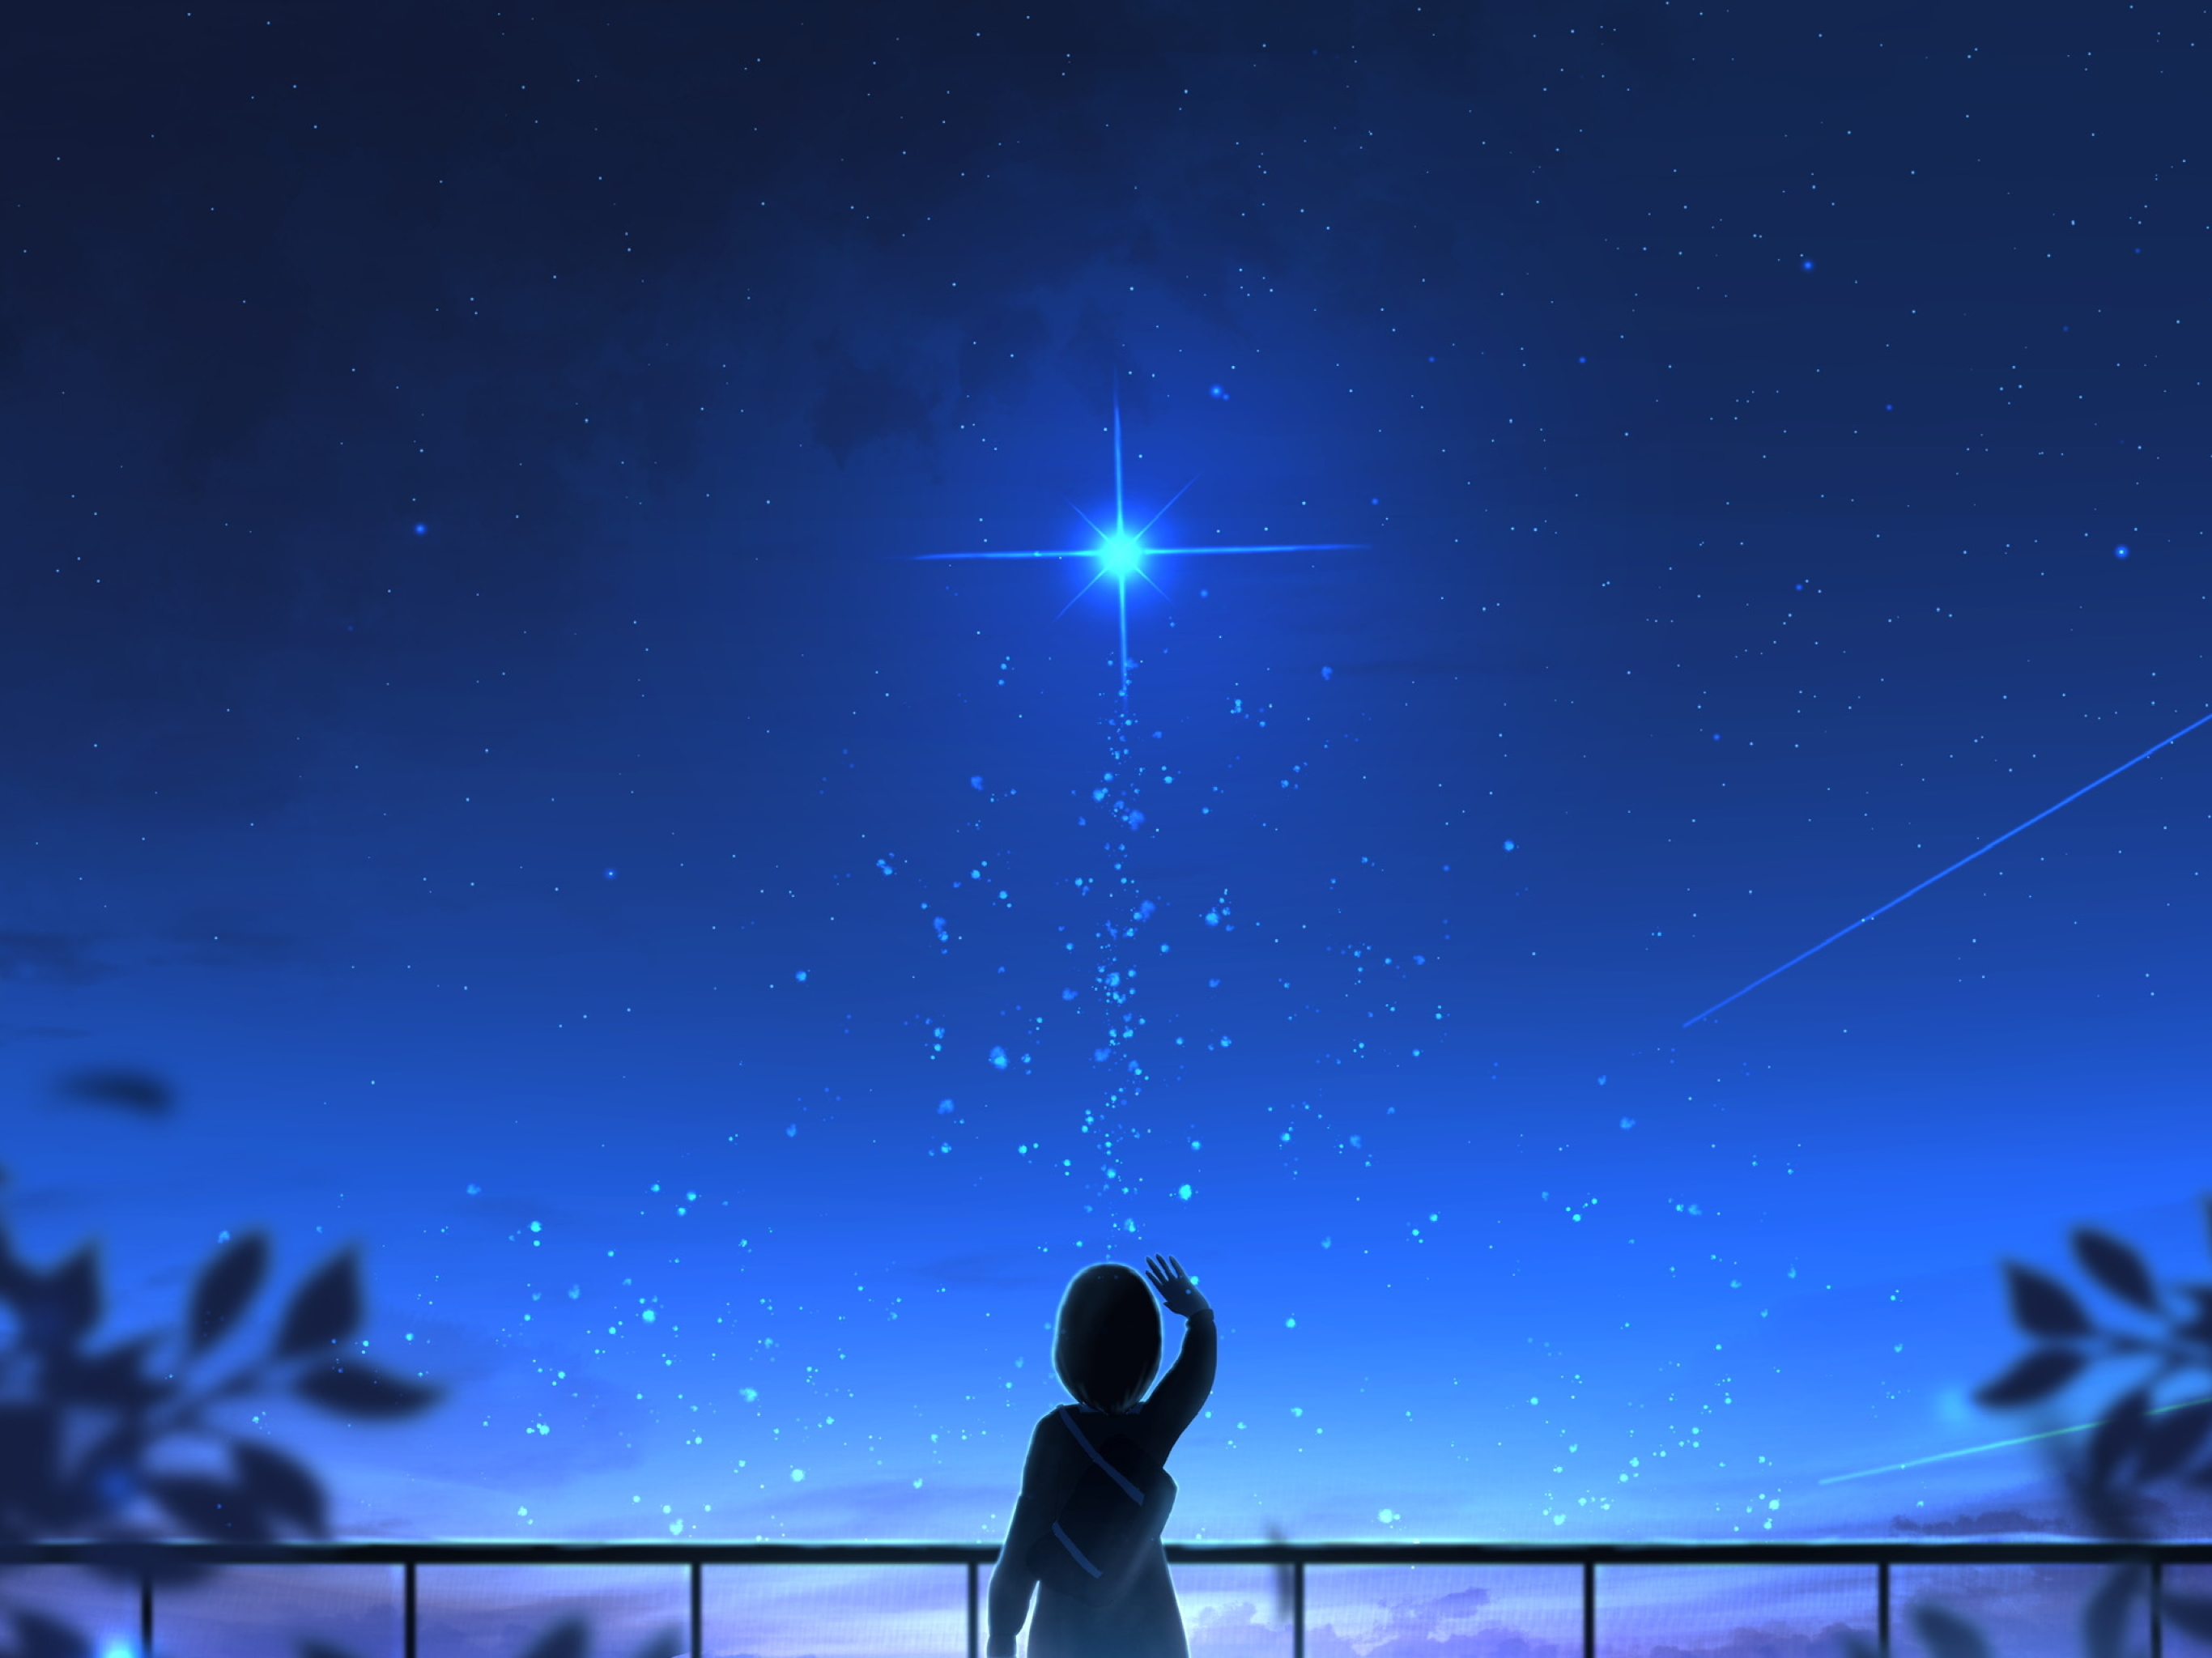 Ария смотрящего на звезды. Девушка на фоне звездного неба. Человек на фоне звездного неба.